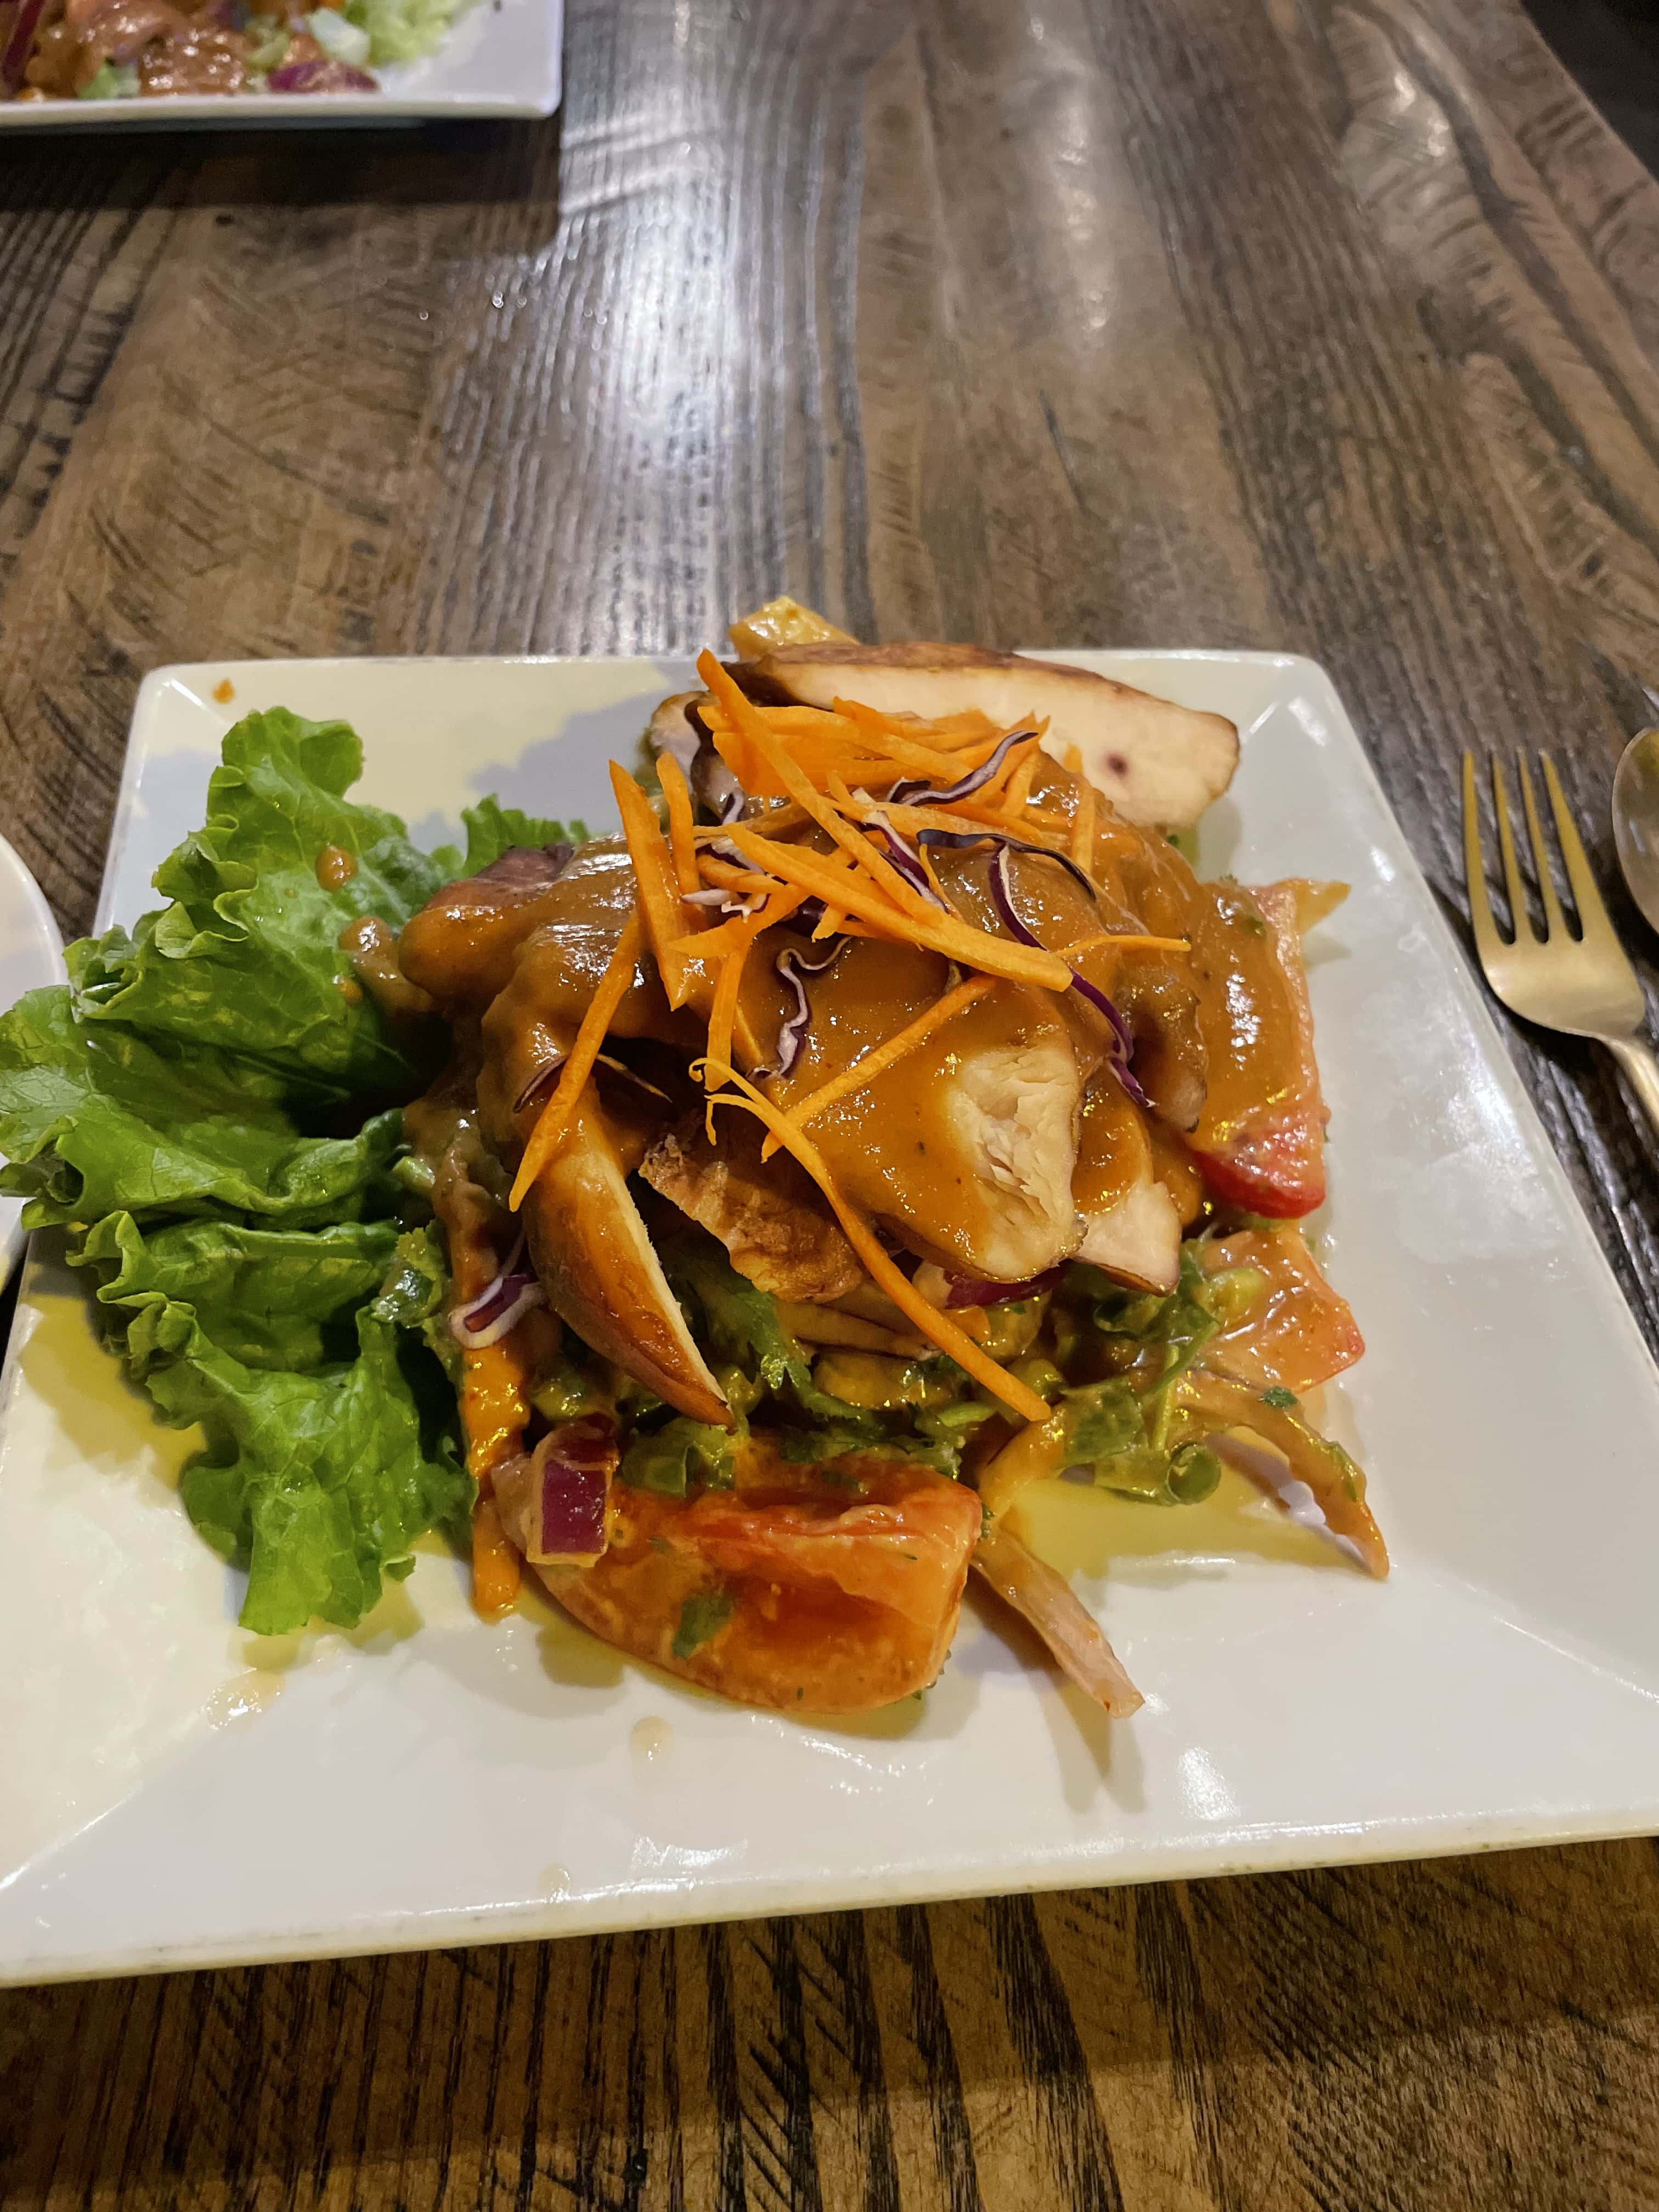 A thai salad with chicken.